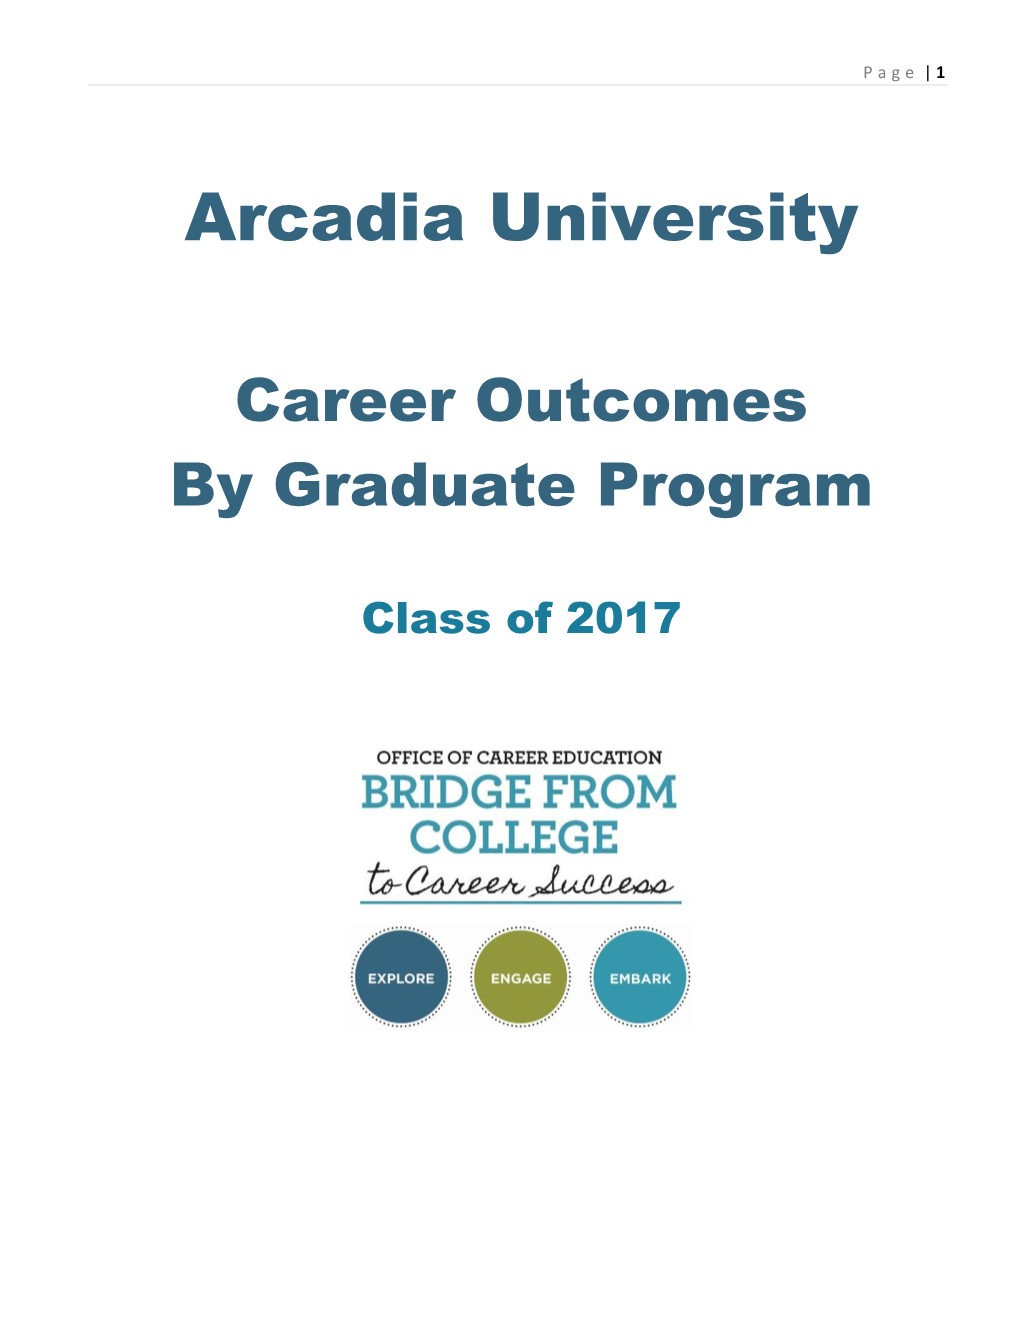 Career Outcomes by Graduate Program